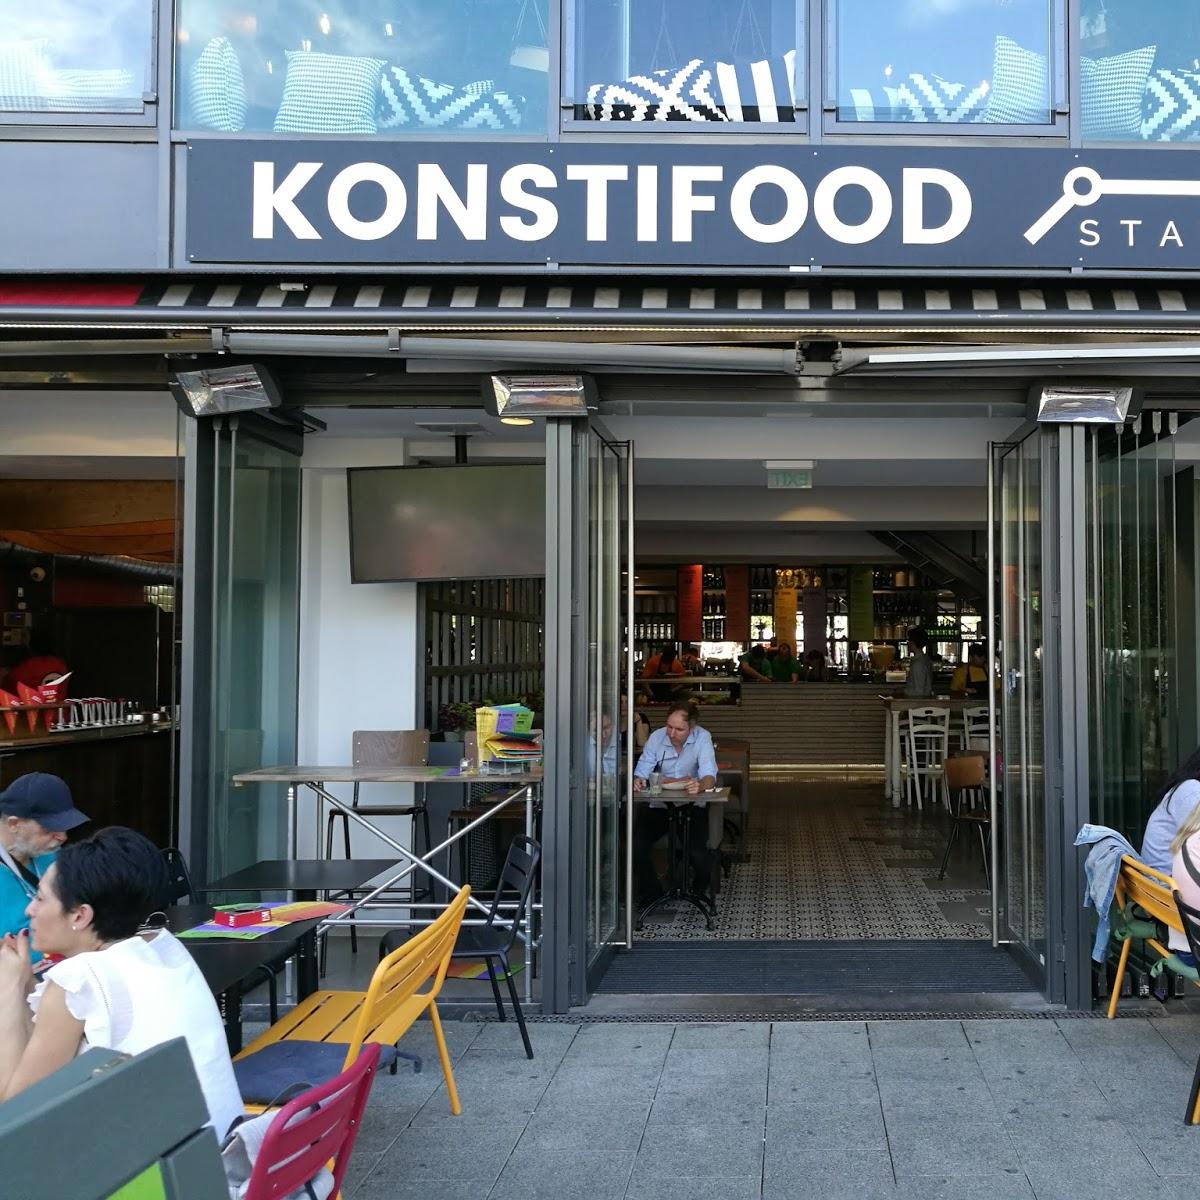 Restaurant "Konstifood Station" in Frankfurt am Main